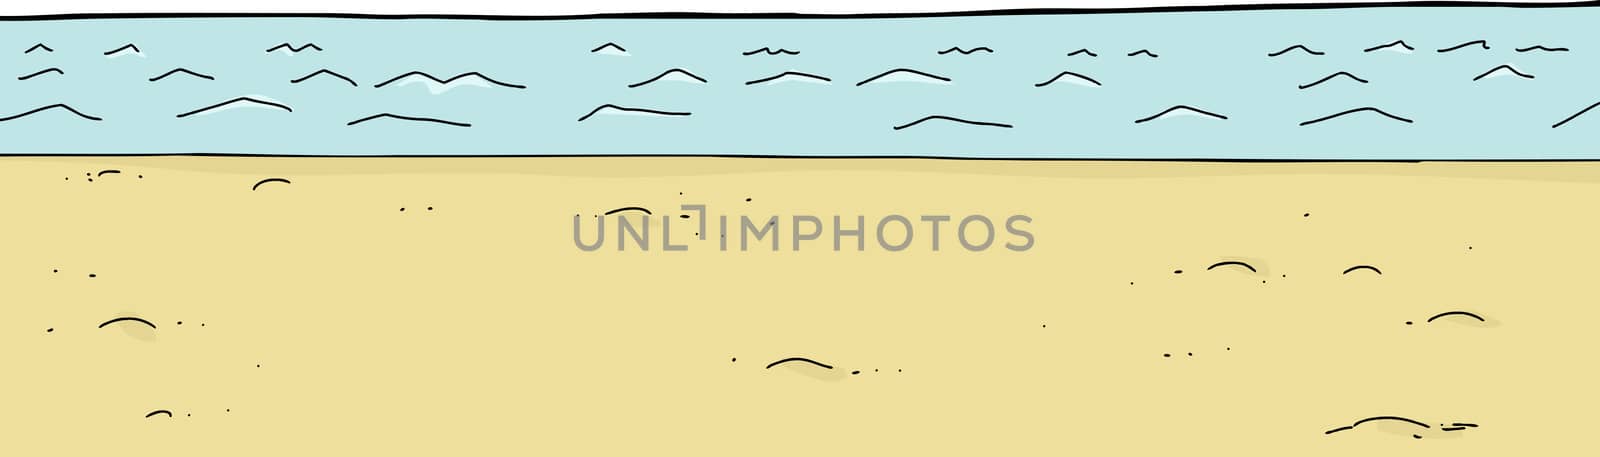 Cartoon ocean beach scene with white background